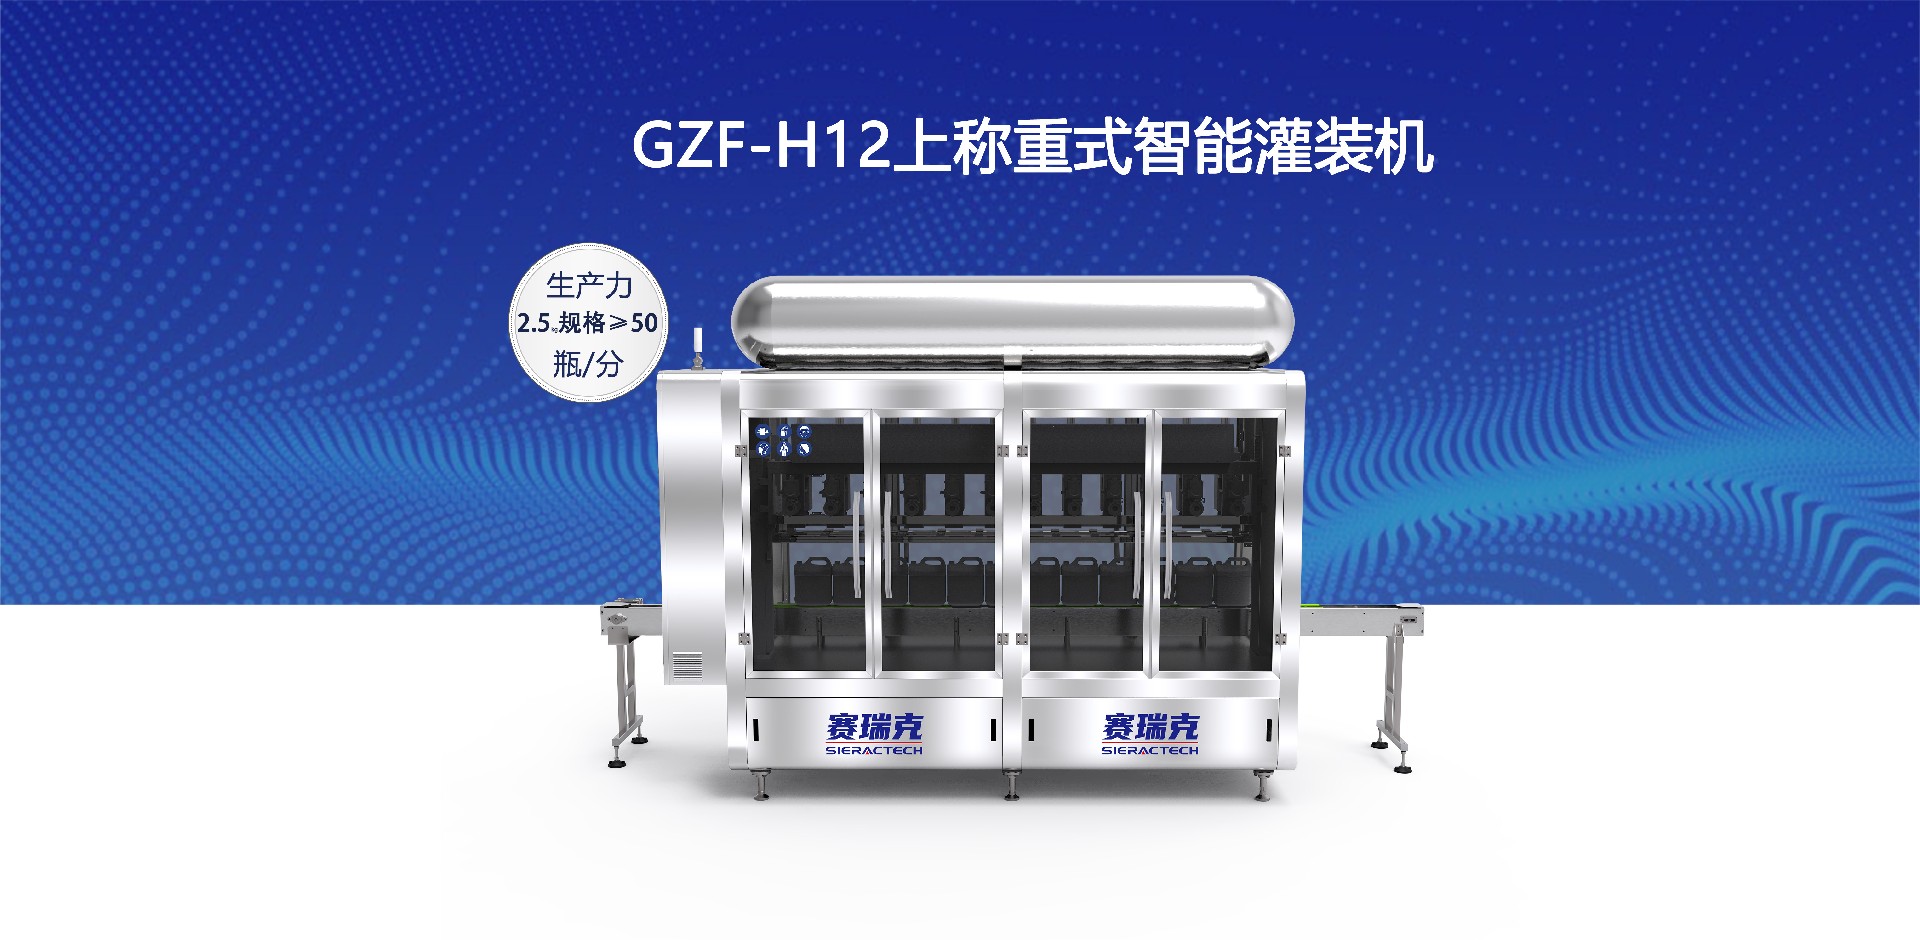 GZF-H12上称重式智能灌装机